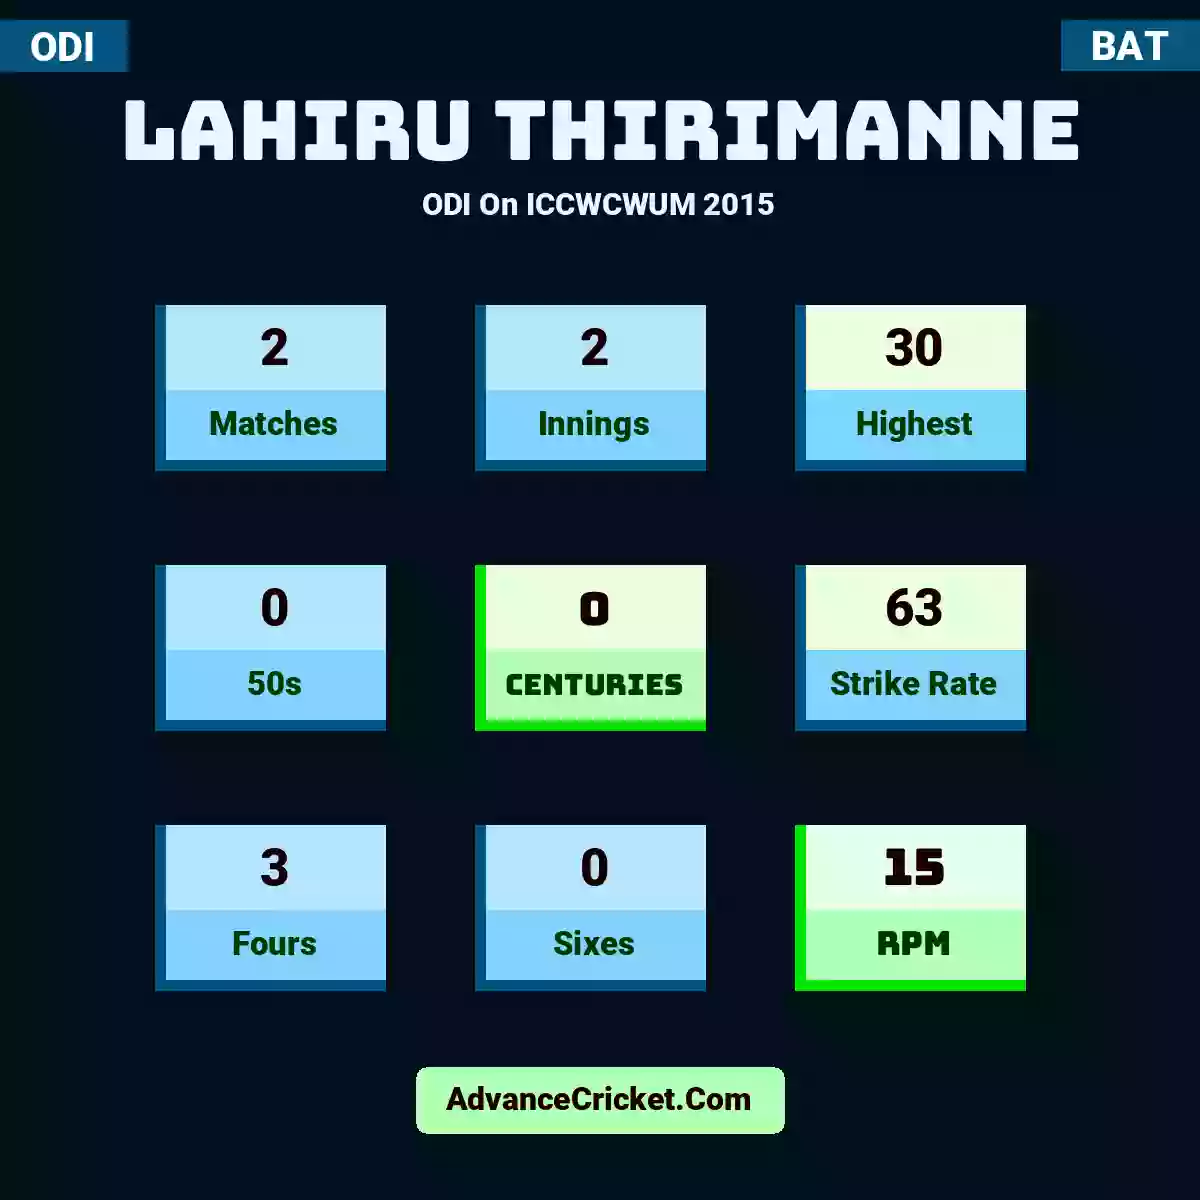 Lahiru Thirimanne ODI  On ICCWCWUM 2015, Lahiru Thirimanne played 2 matches, scored 30 runs as highest, 0 half-centuries, and 0 centuries, with a strike rate of 63. L.Thirimanne hit 3 fours and 0 sixes, with an RPM of 15.